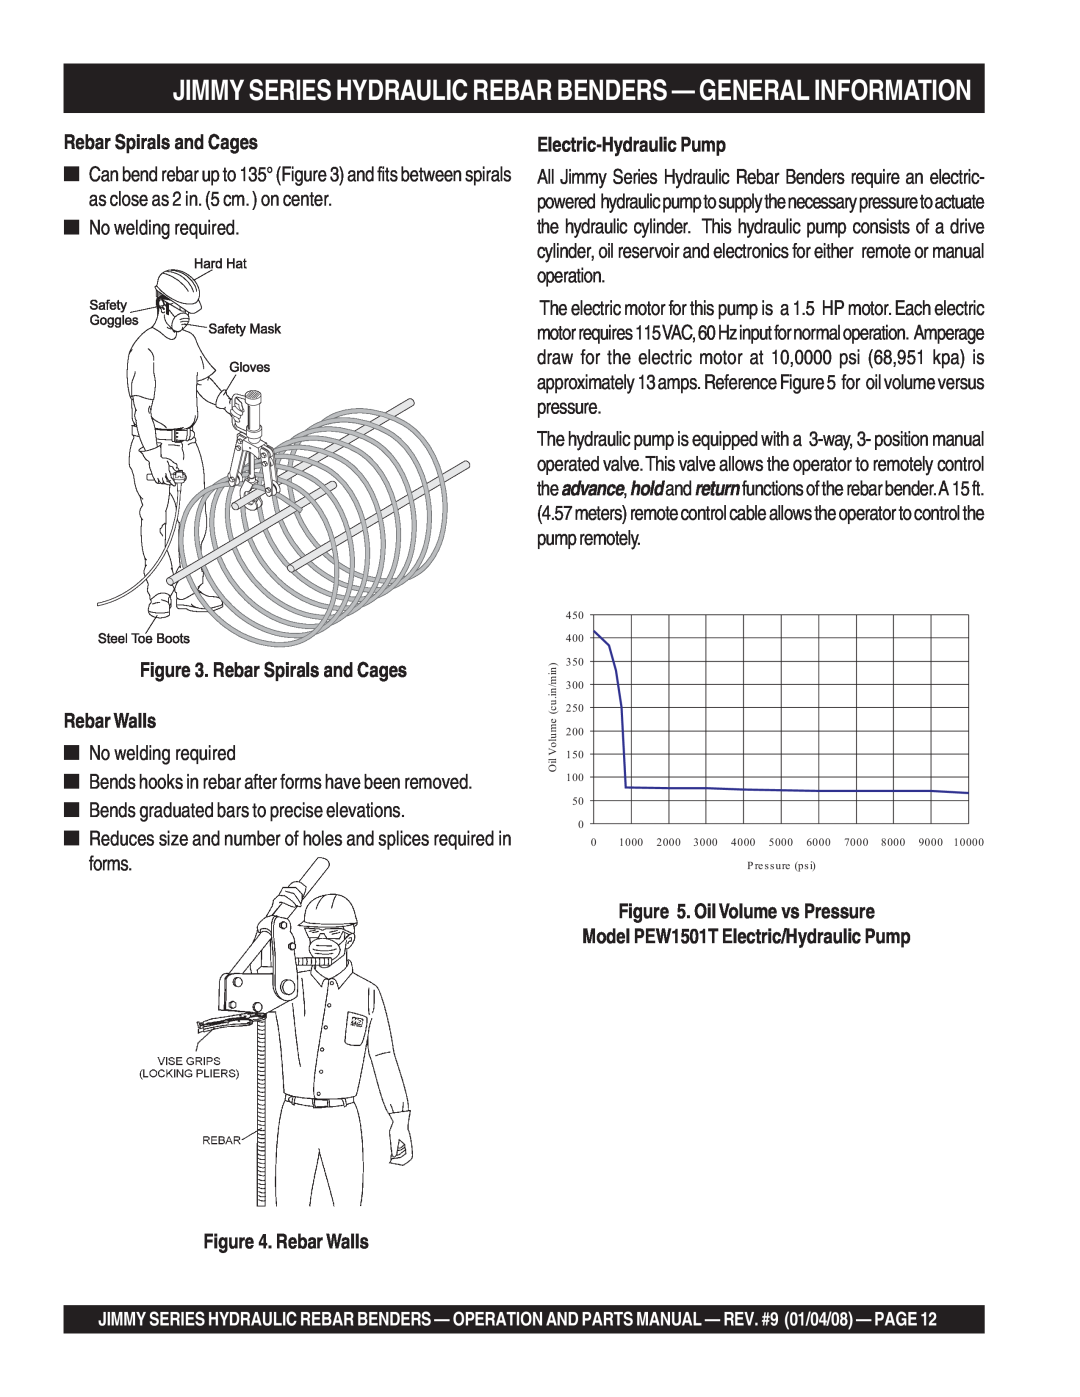 Multiquip JB8090, JPU1, JB5090 manual Rebar Spirals and Cages Rebar Walls, Electric-HydraulicPump, Oil Volume vs Pressure 